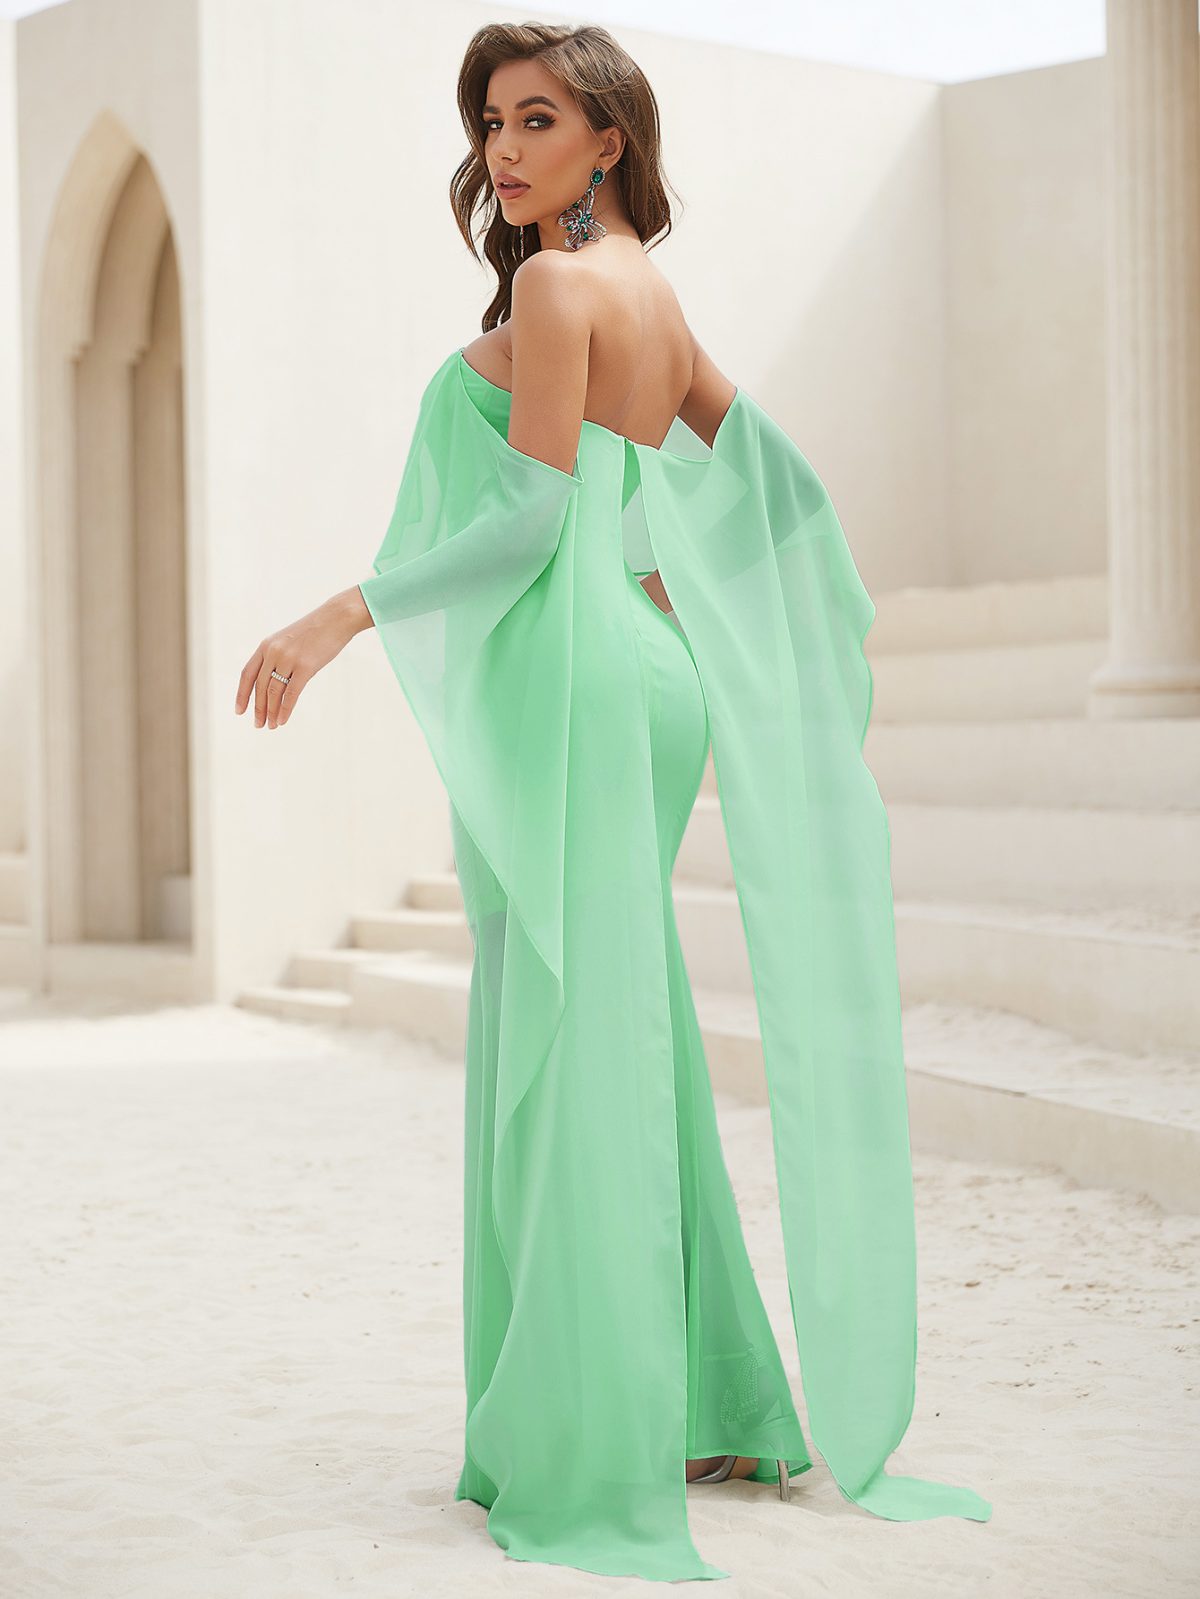 Strapless Short Sleeve Formal Elegant Lace Slim Bodycon Maxi Emerald Dress - Cocktail Dresses - Uniqistic.com